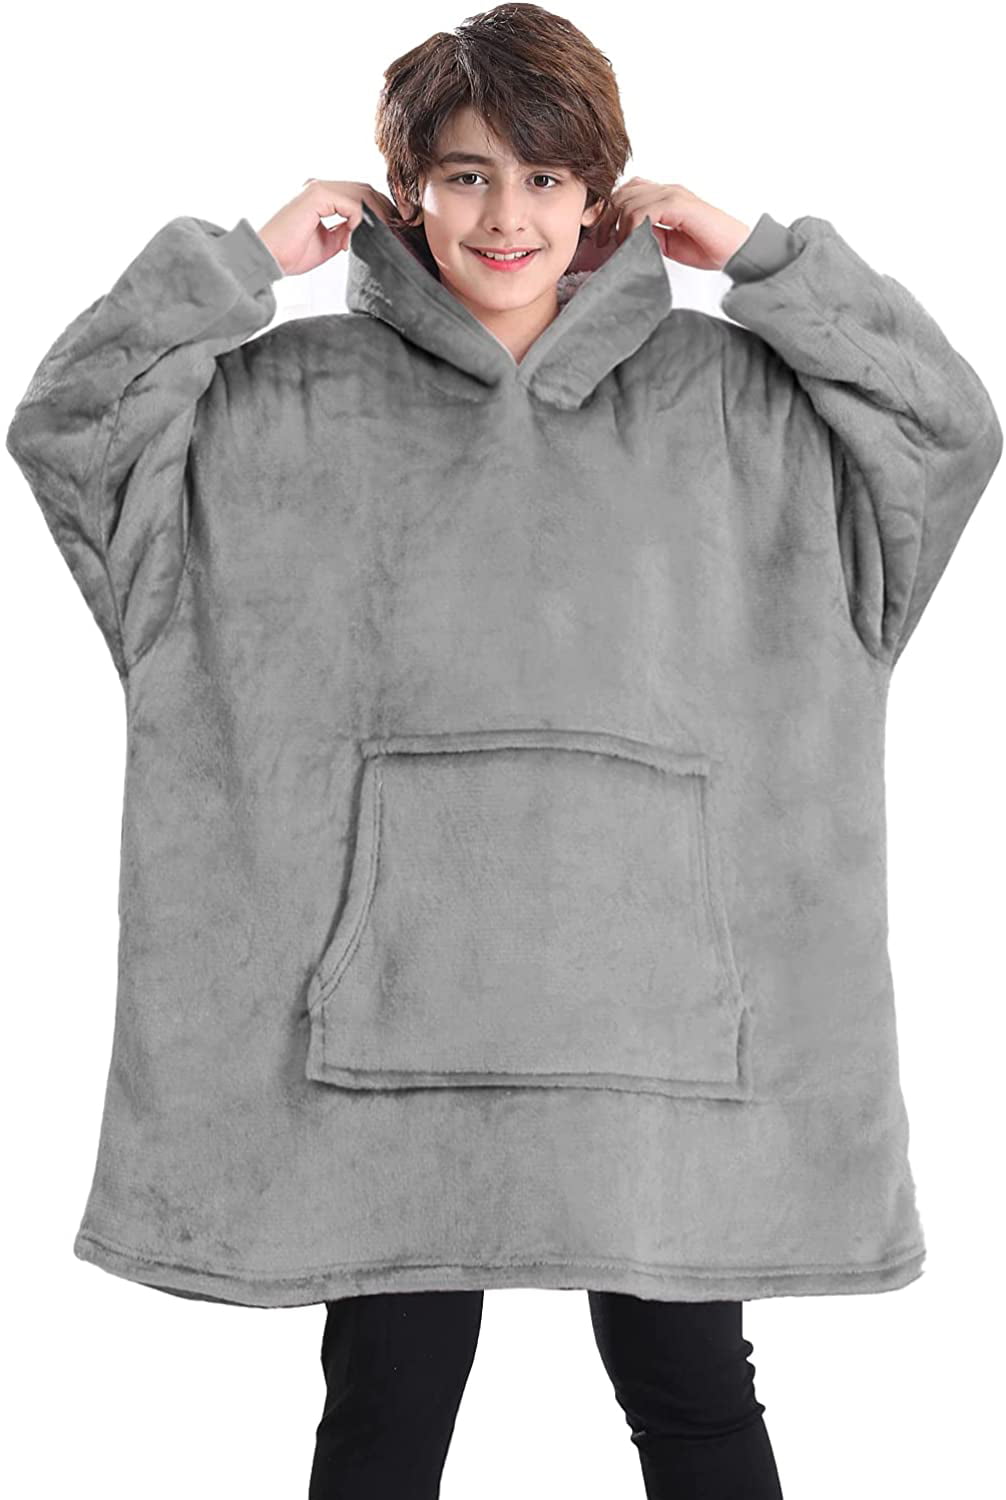 Oversized Hoodie Sweatshirt Blanket Super Soft Fleece Dressing Gown Warm Comfortable Hooded Robe Blanket Hoodie for Kids Gifts for Gamers Boys Girls Teens